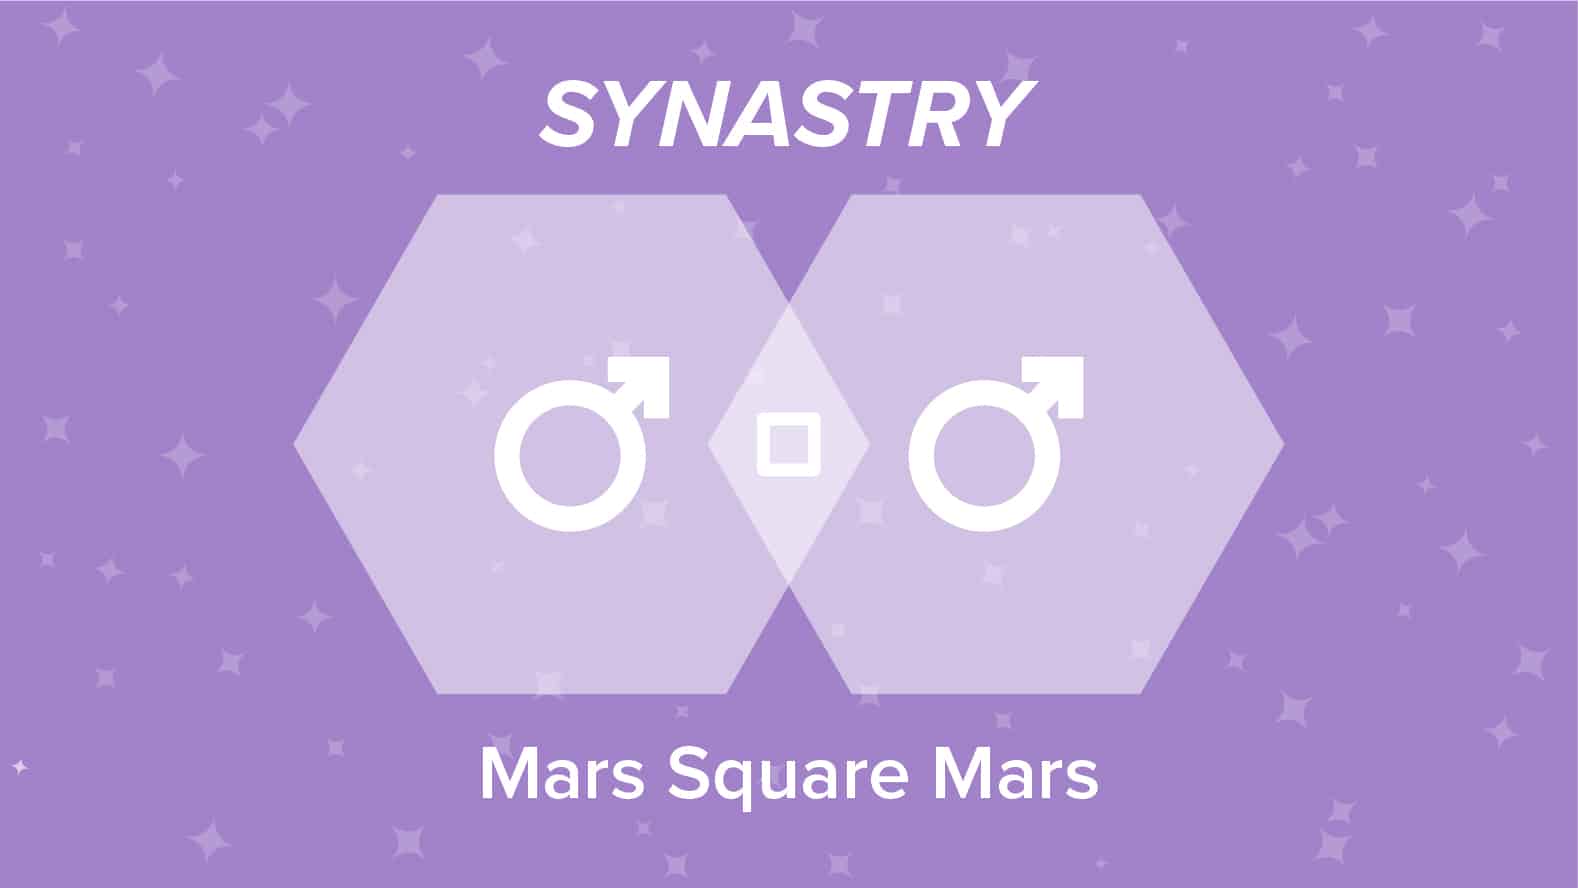 Mars Square Mars Synastry